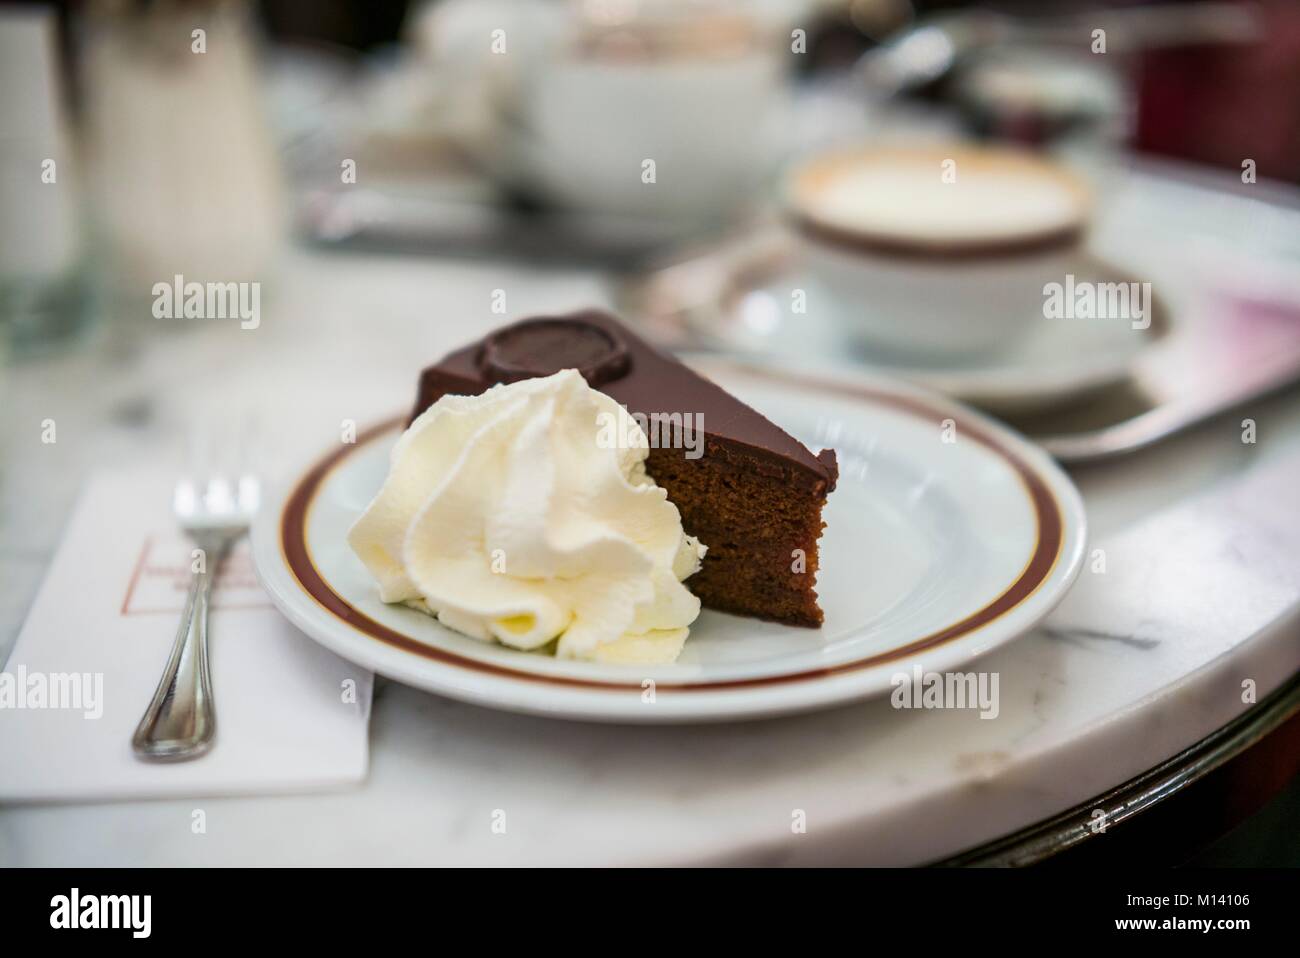 Austria, Viena, Cafe Sacher, rebanada de pastel Foto de stock